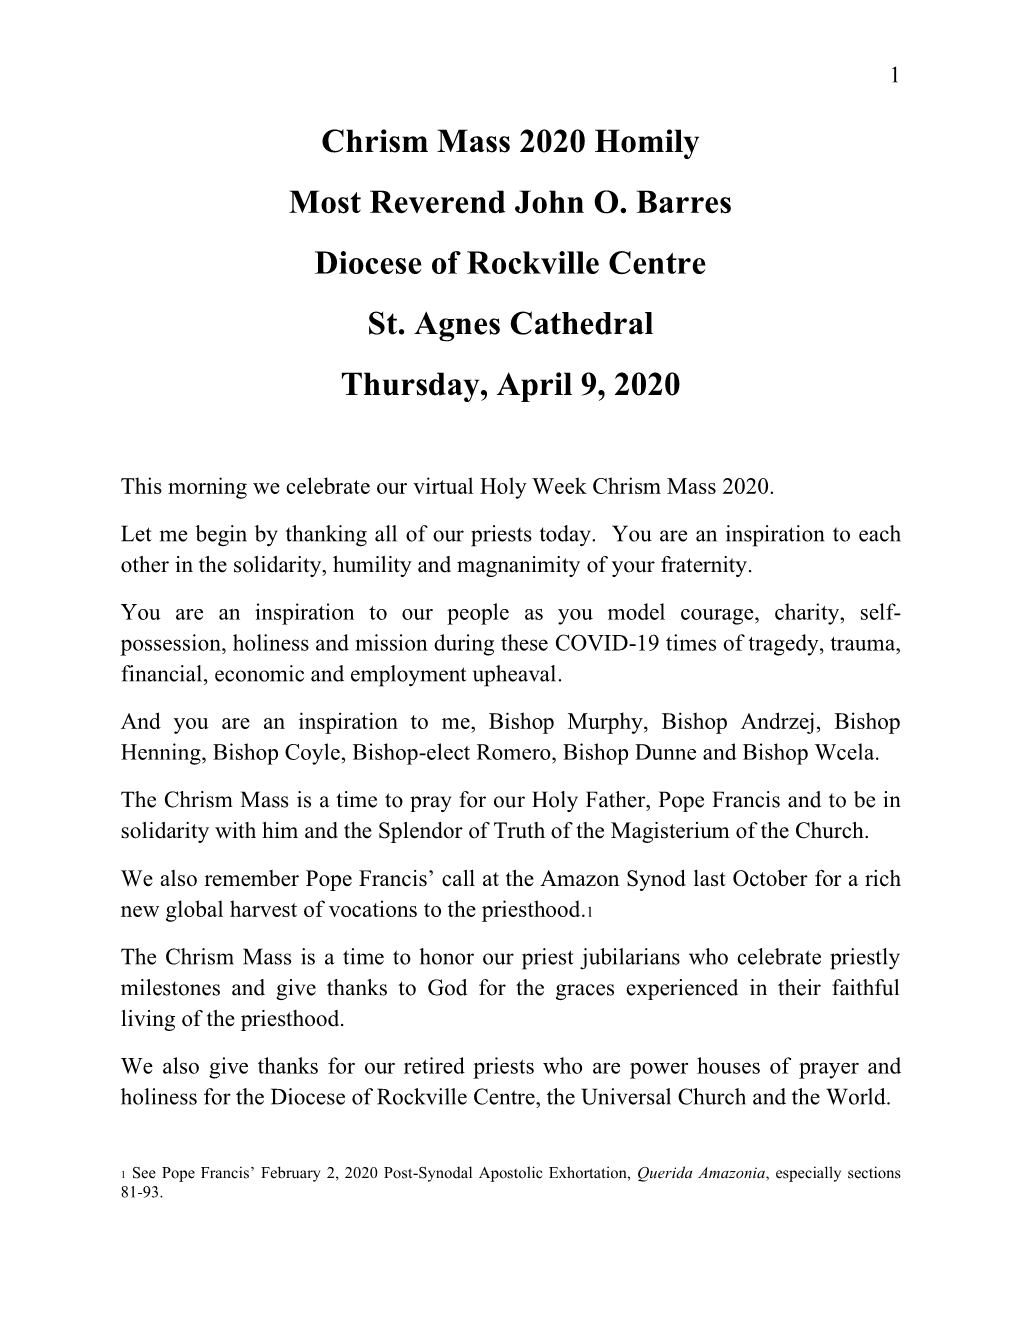 Chrism Mass 2020 Homily Most Reverend John O. Barres Diocese of Rockville Centre St